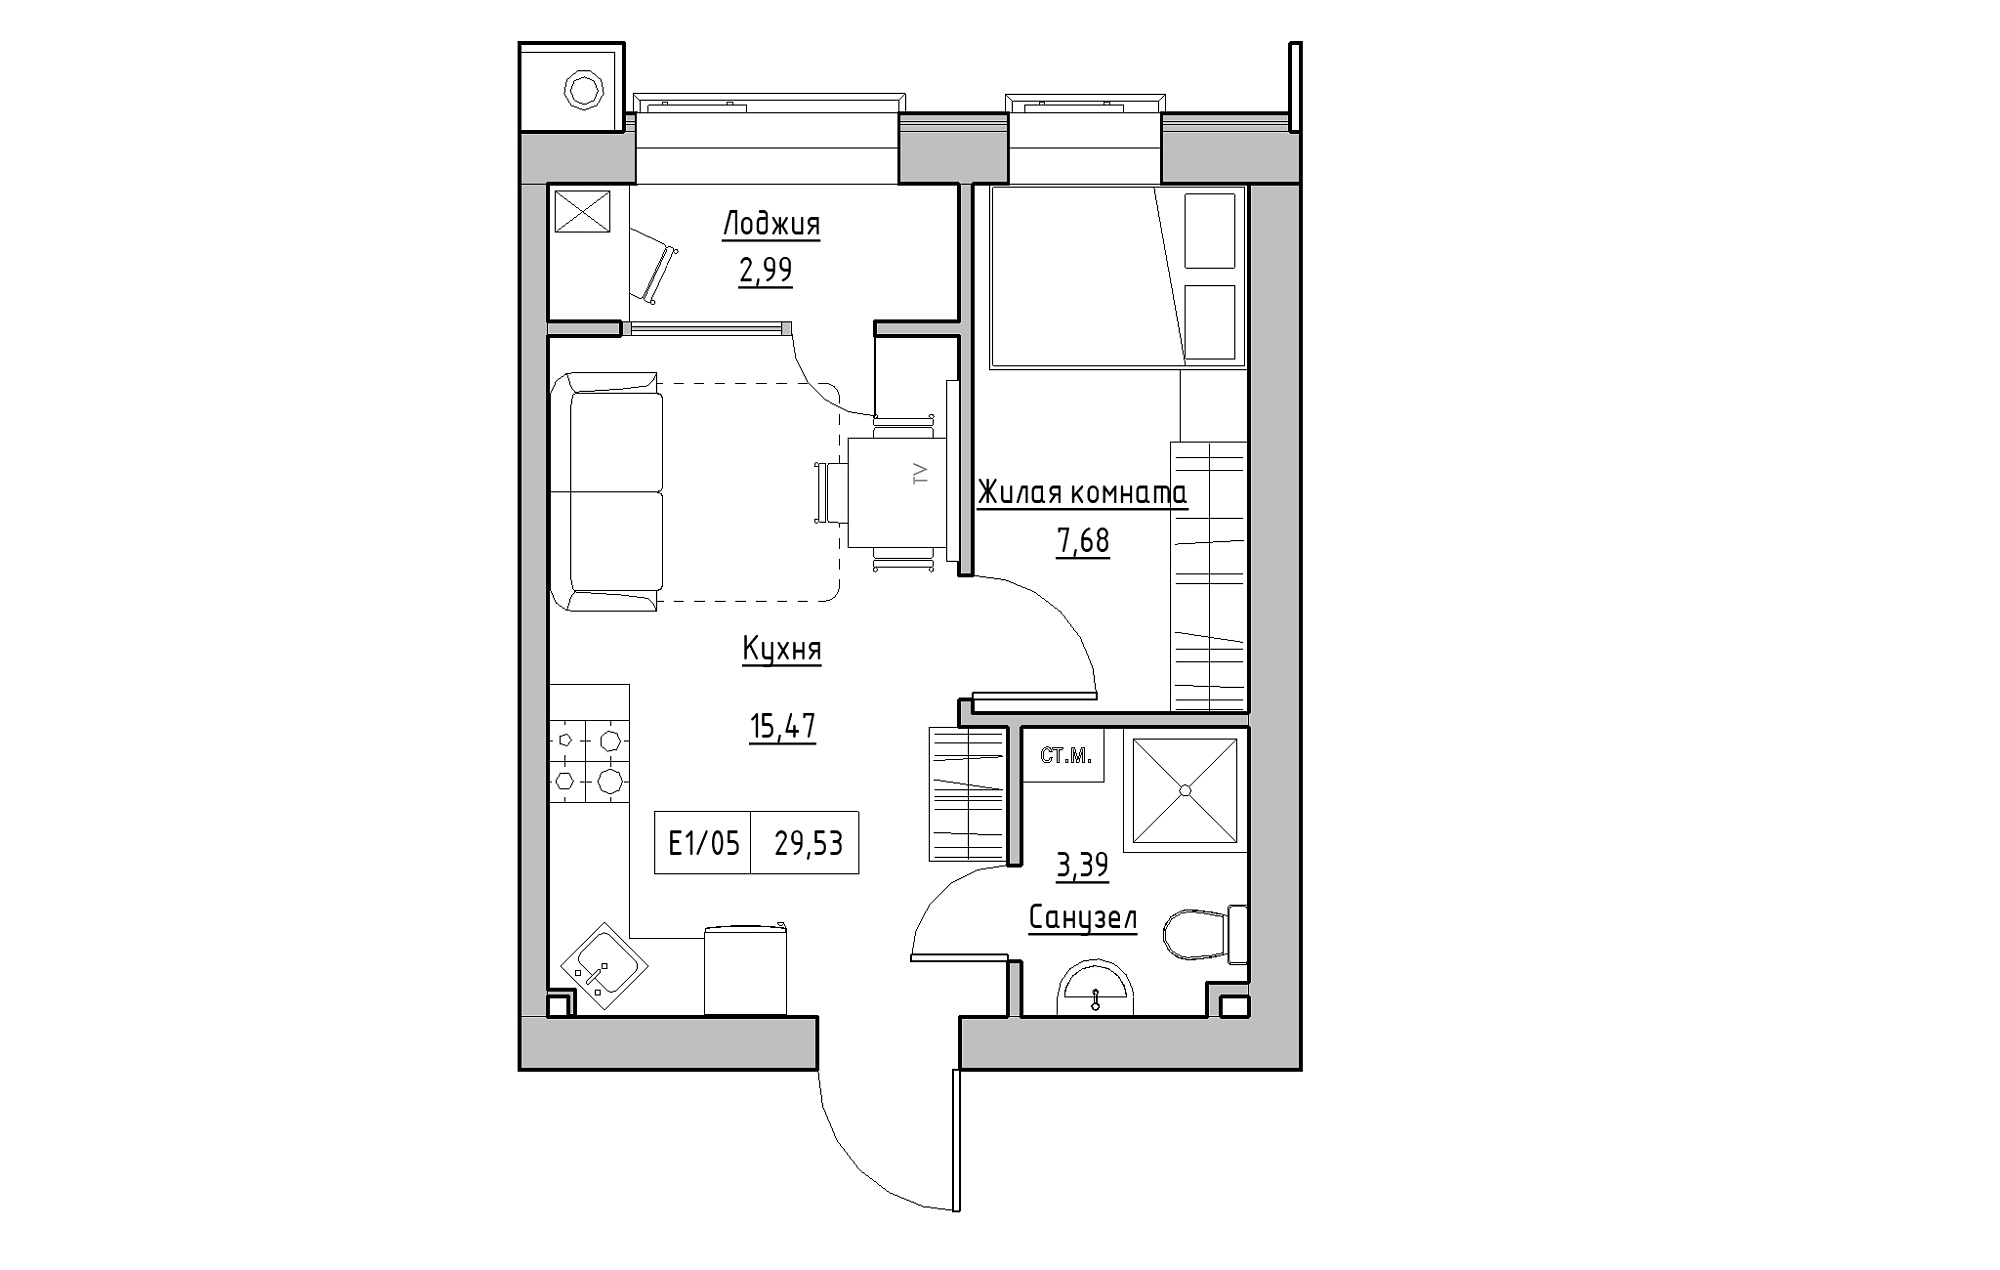 Planning 1-rm flats area 29.53m2, KS-013-01/0008.